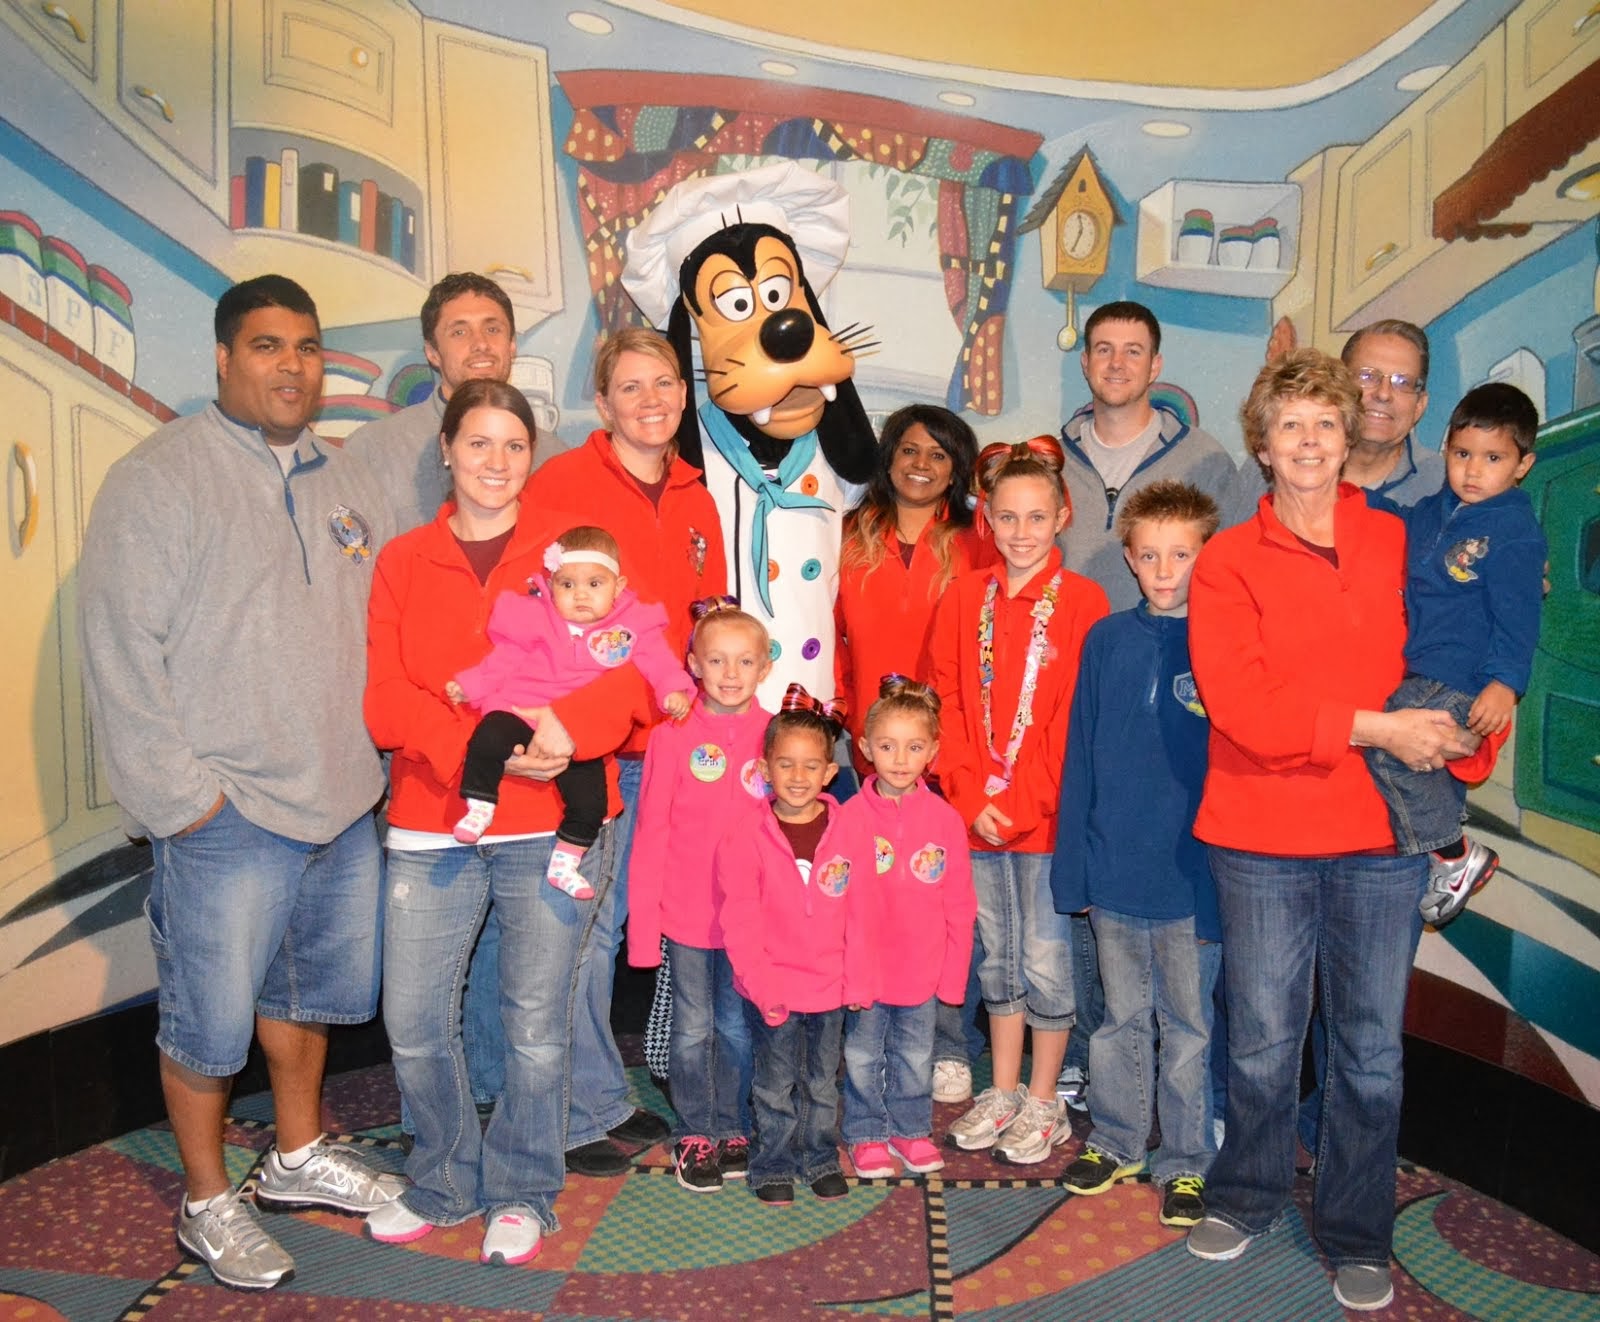 The Family at Disneyland